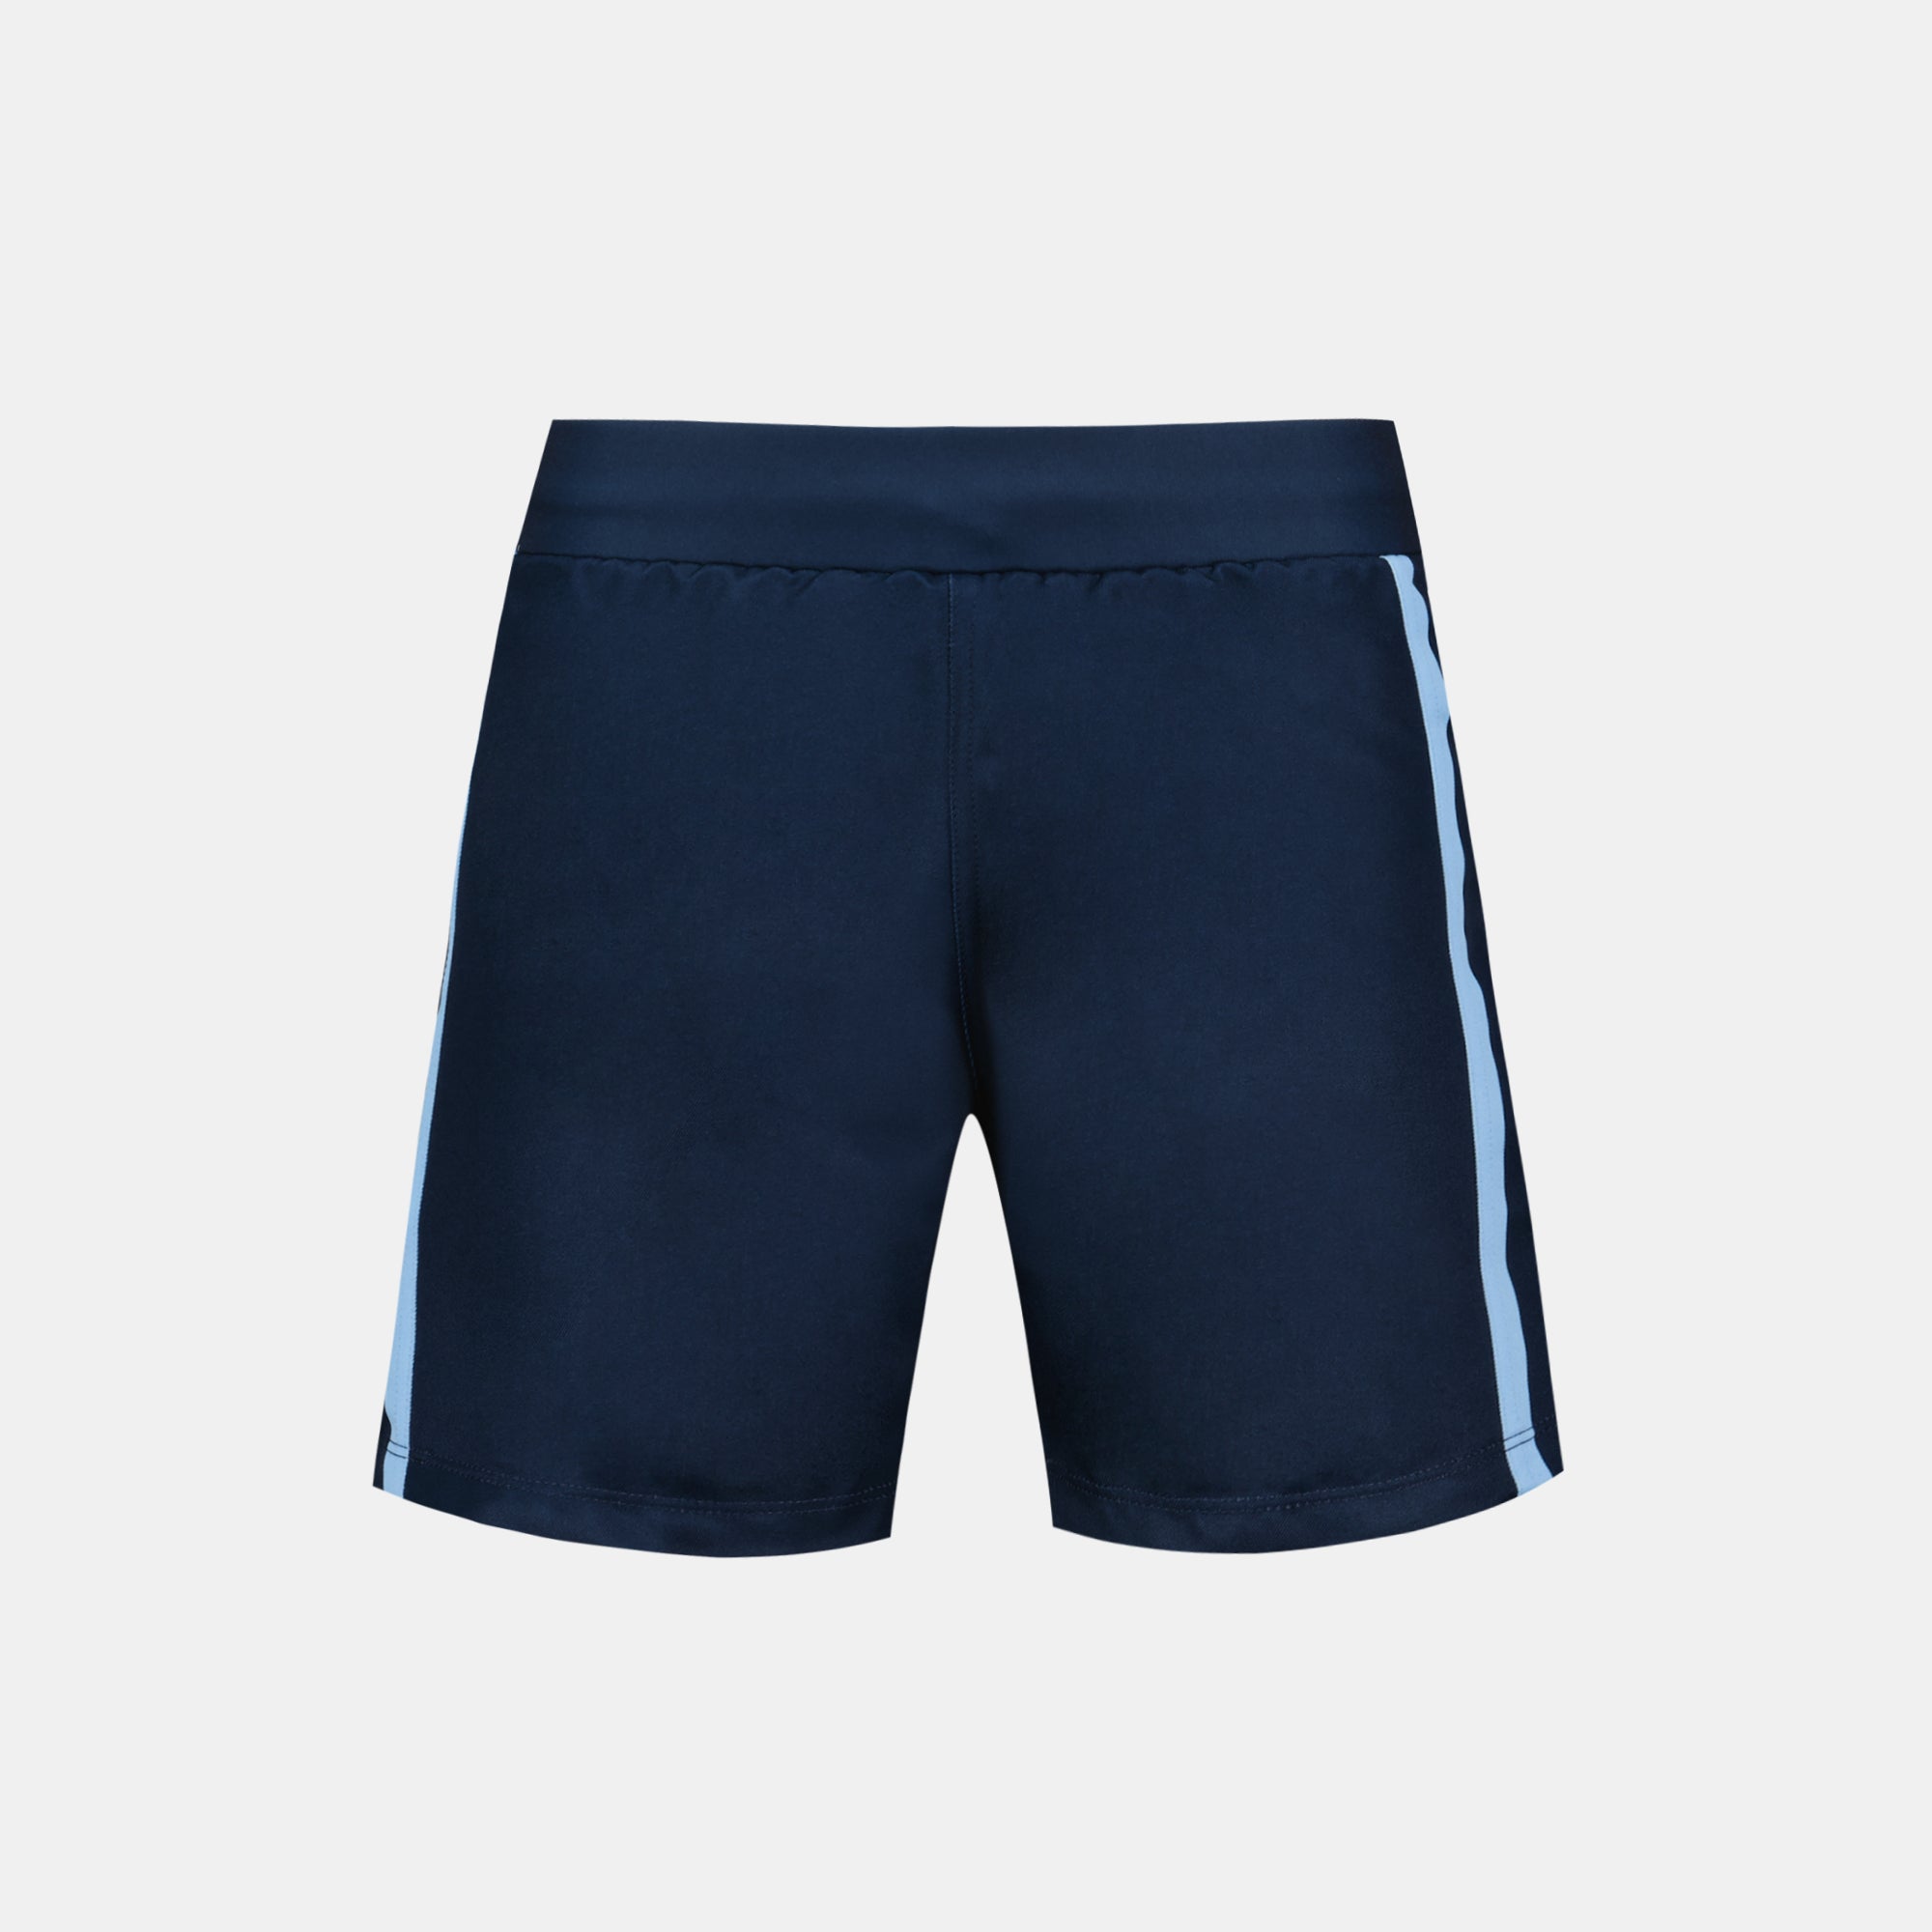 2422771-AB REPLICA Short Enfant blue navy  | Shorts for kids